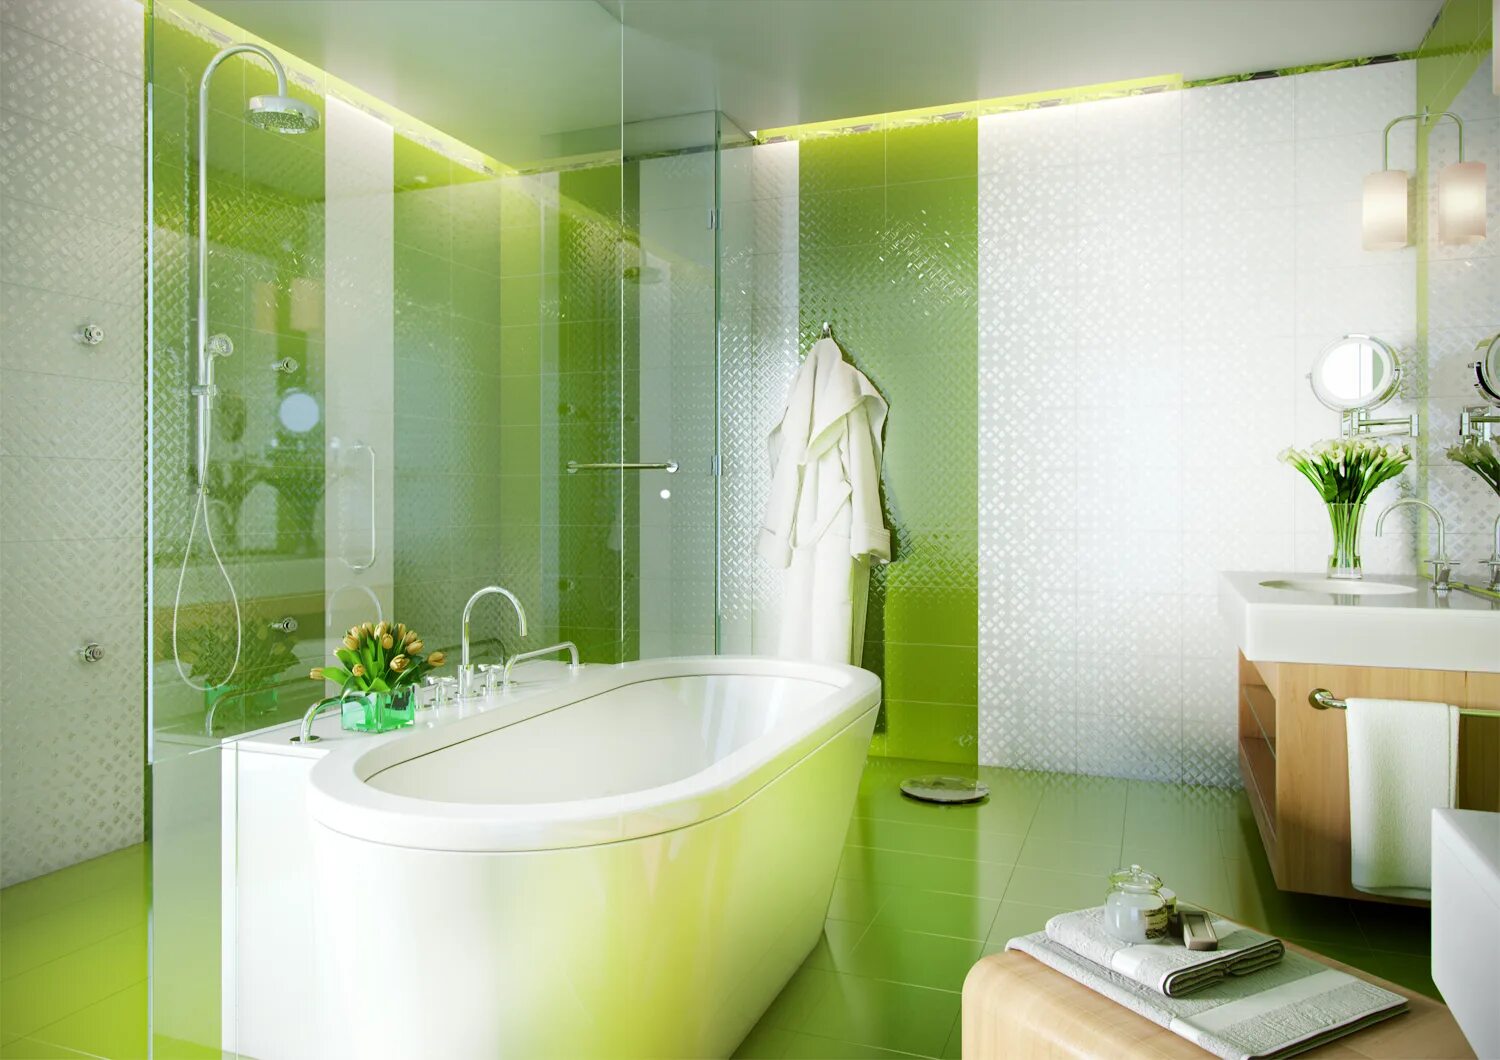 Ванная комната ру. Плитка Голден релакс Тайл зеленая. Керамическая плитка релакс Голден Тайл. Golden Tile Relax зеленый. Салатовая ванная.